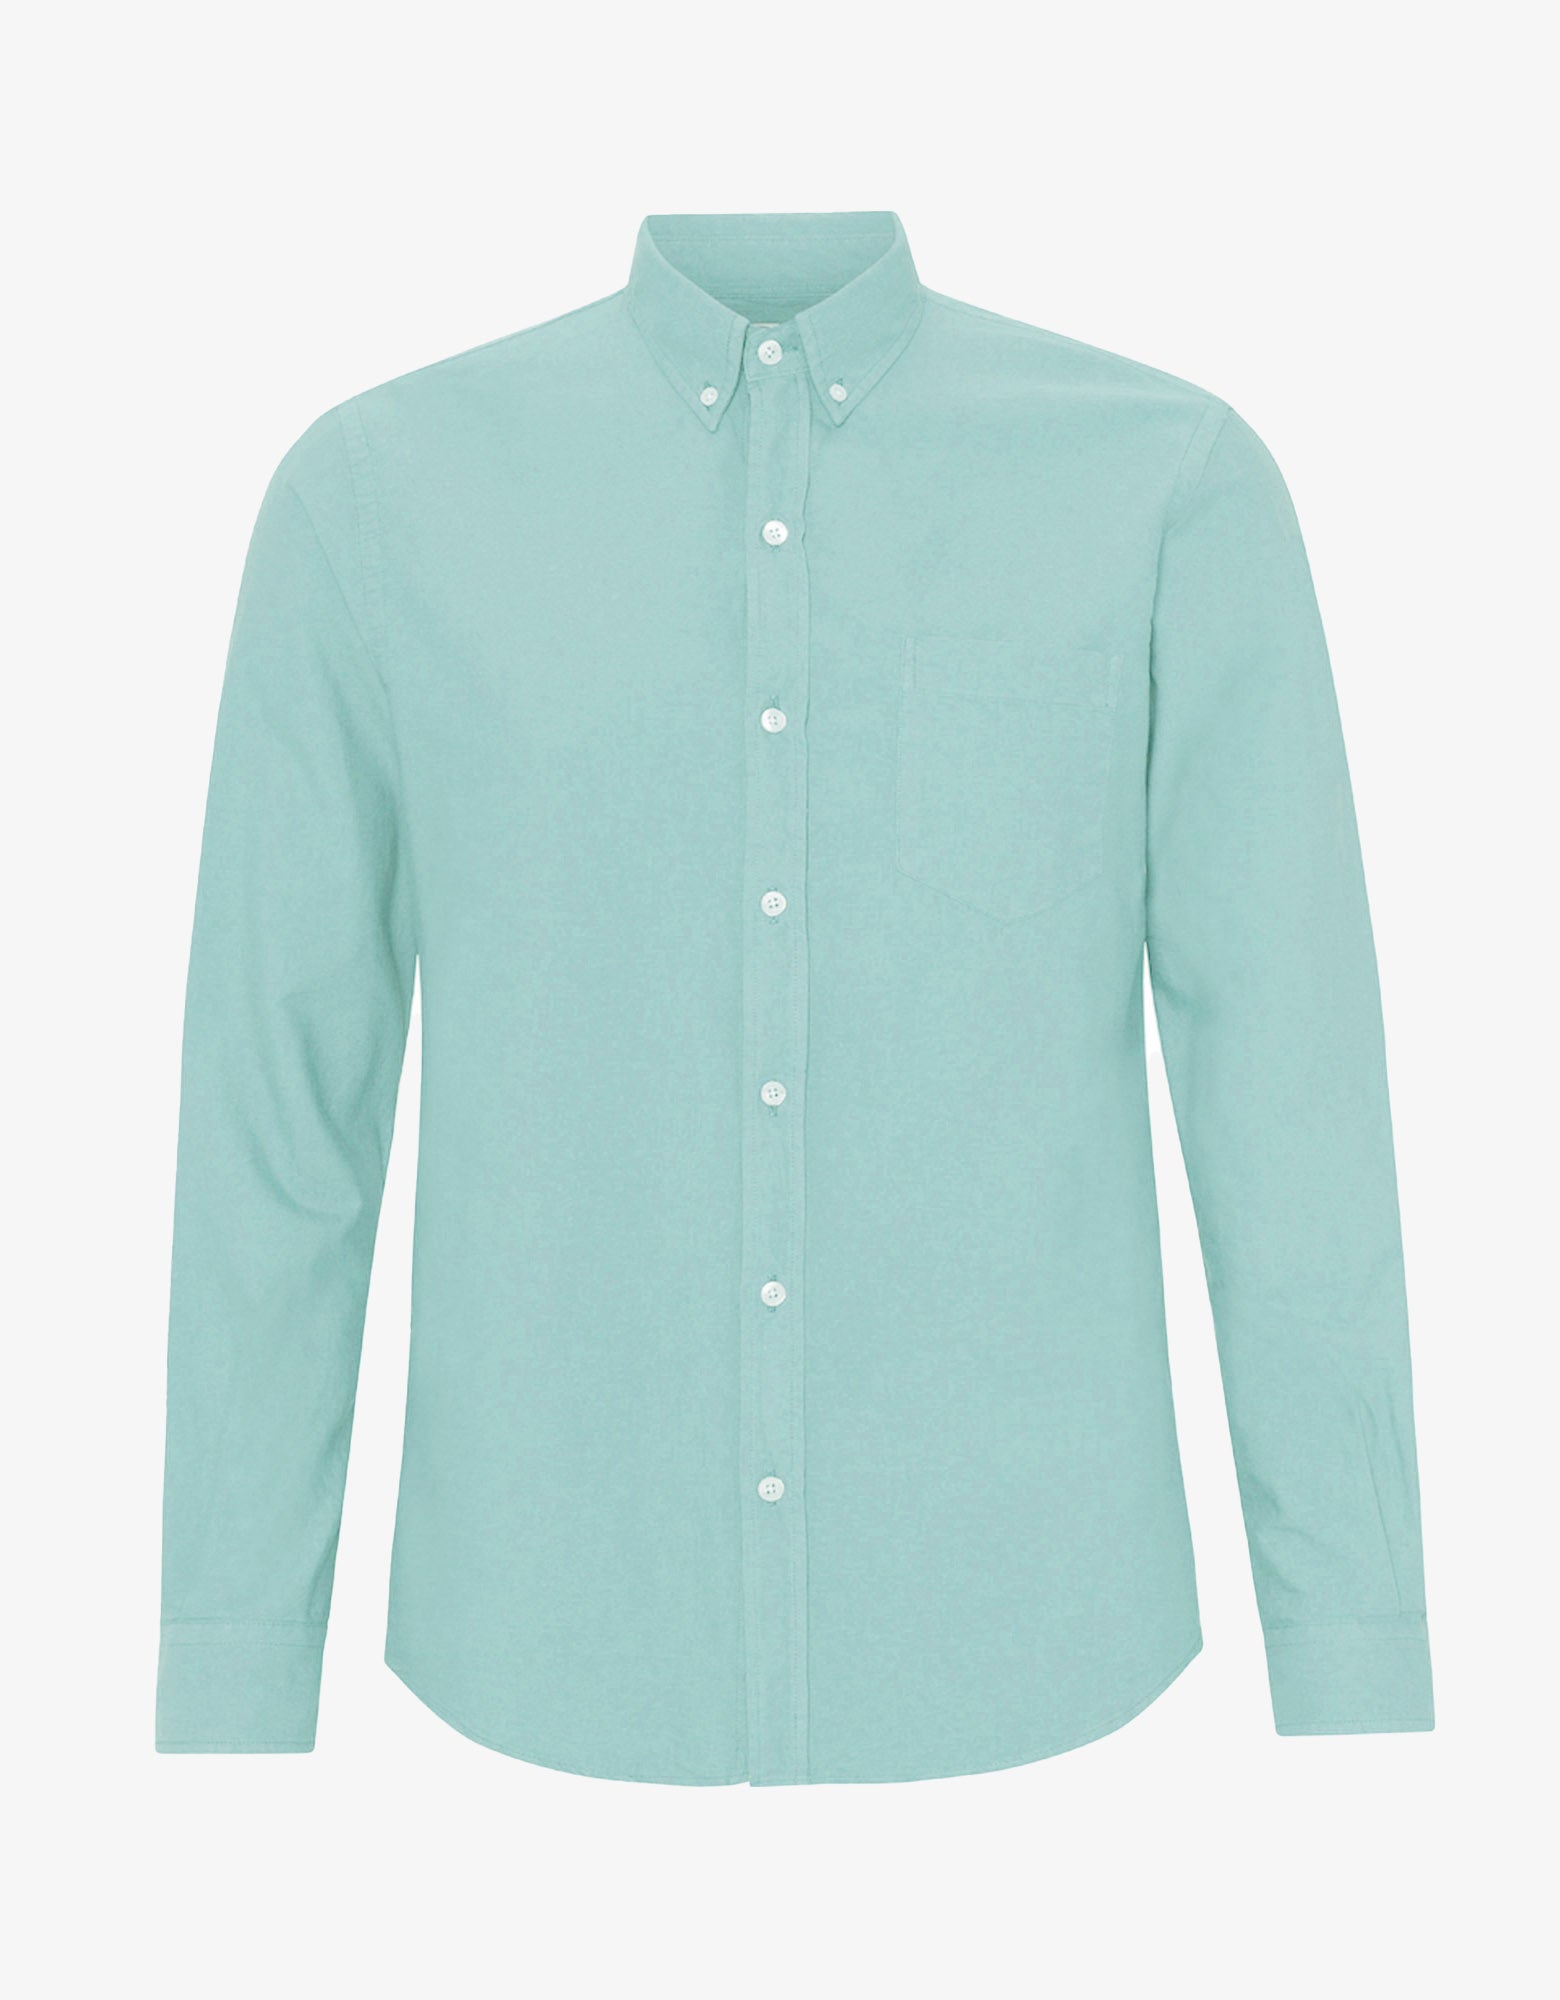 Colorful Standard Organic Button Down Shirt Shirt Teal Blue